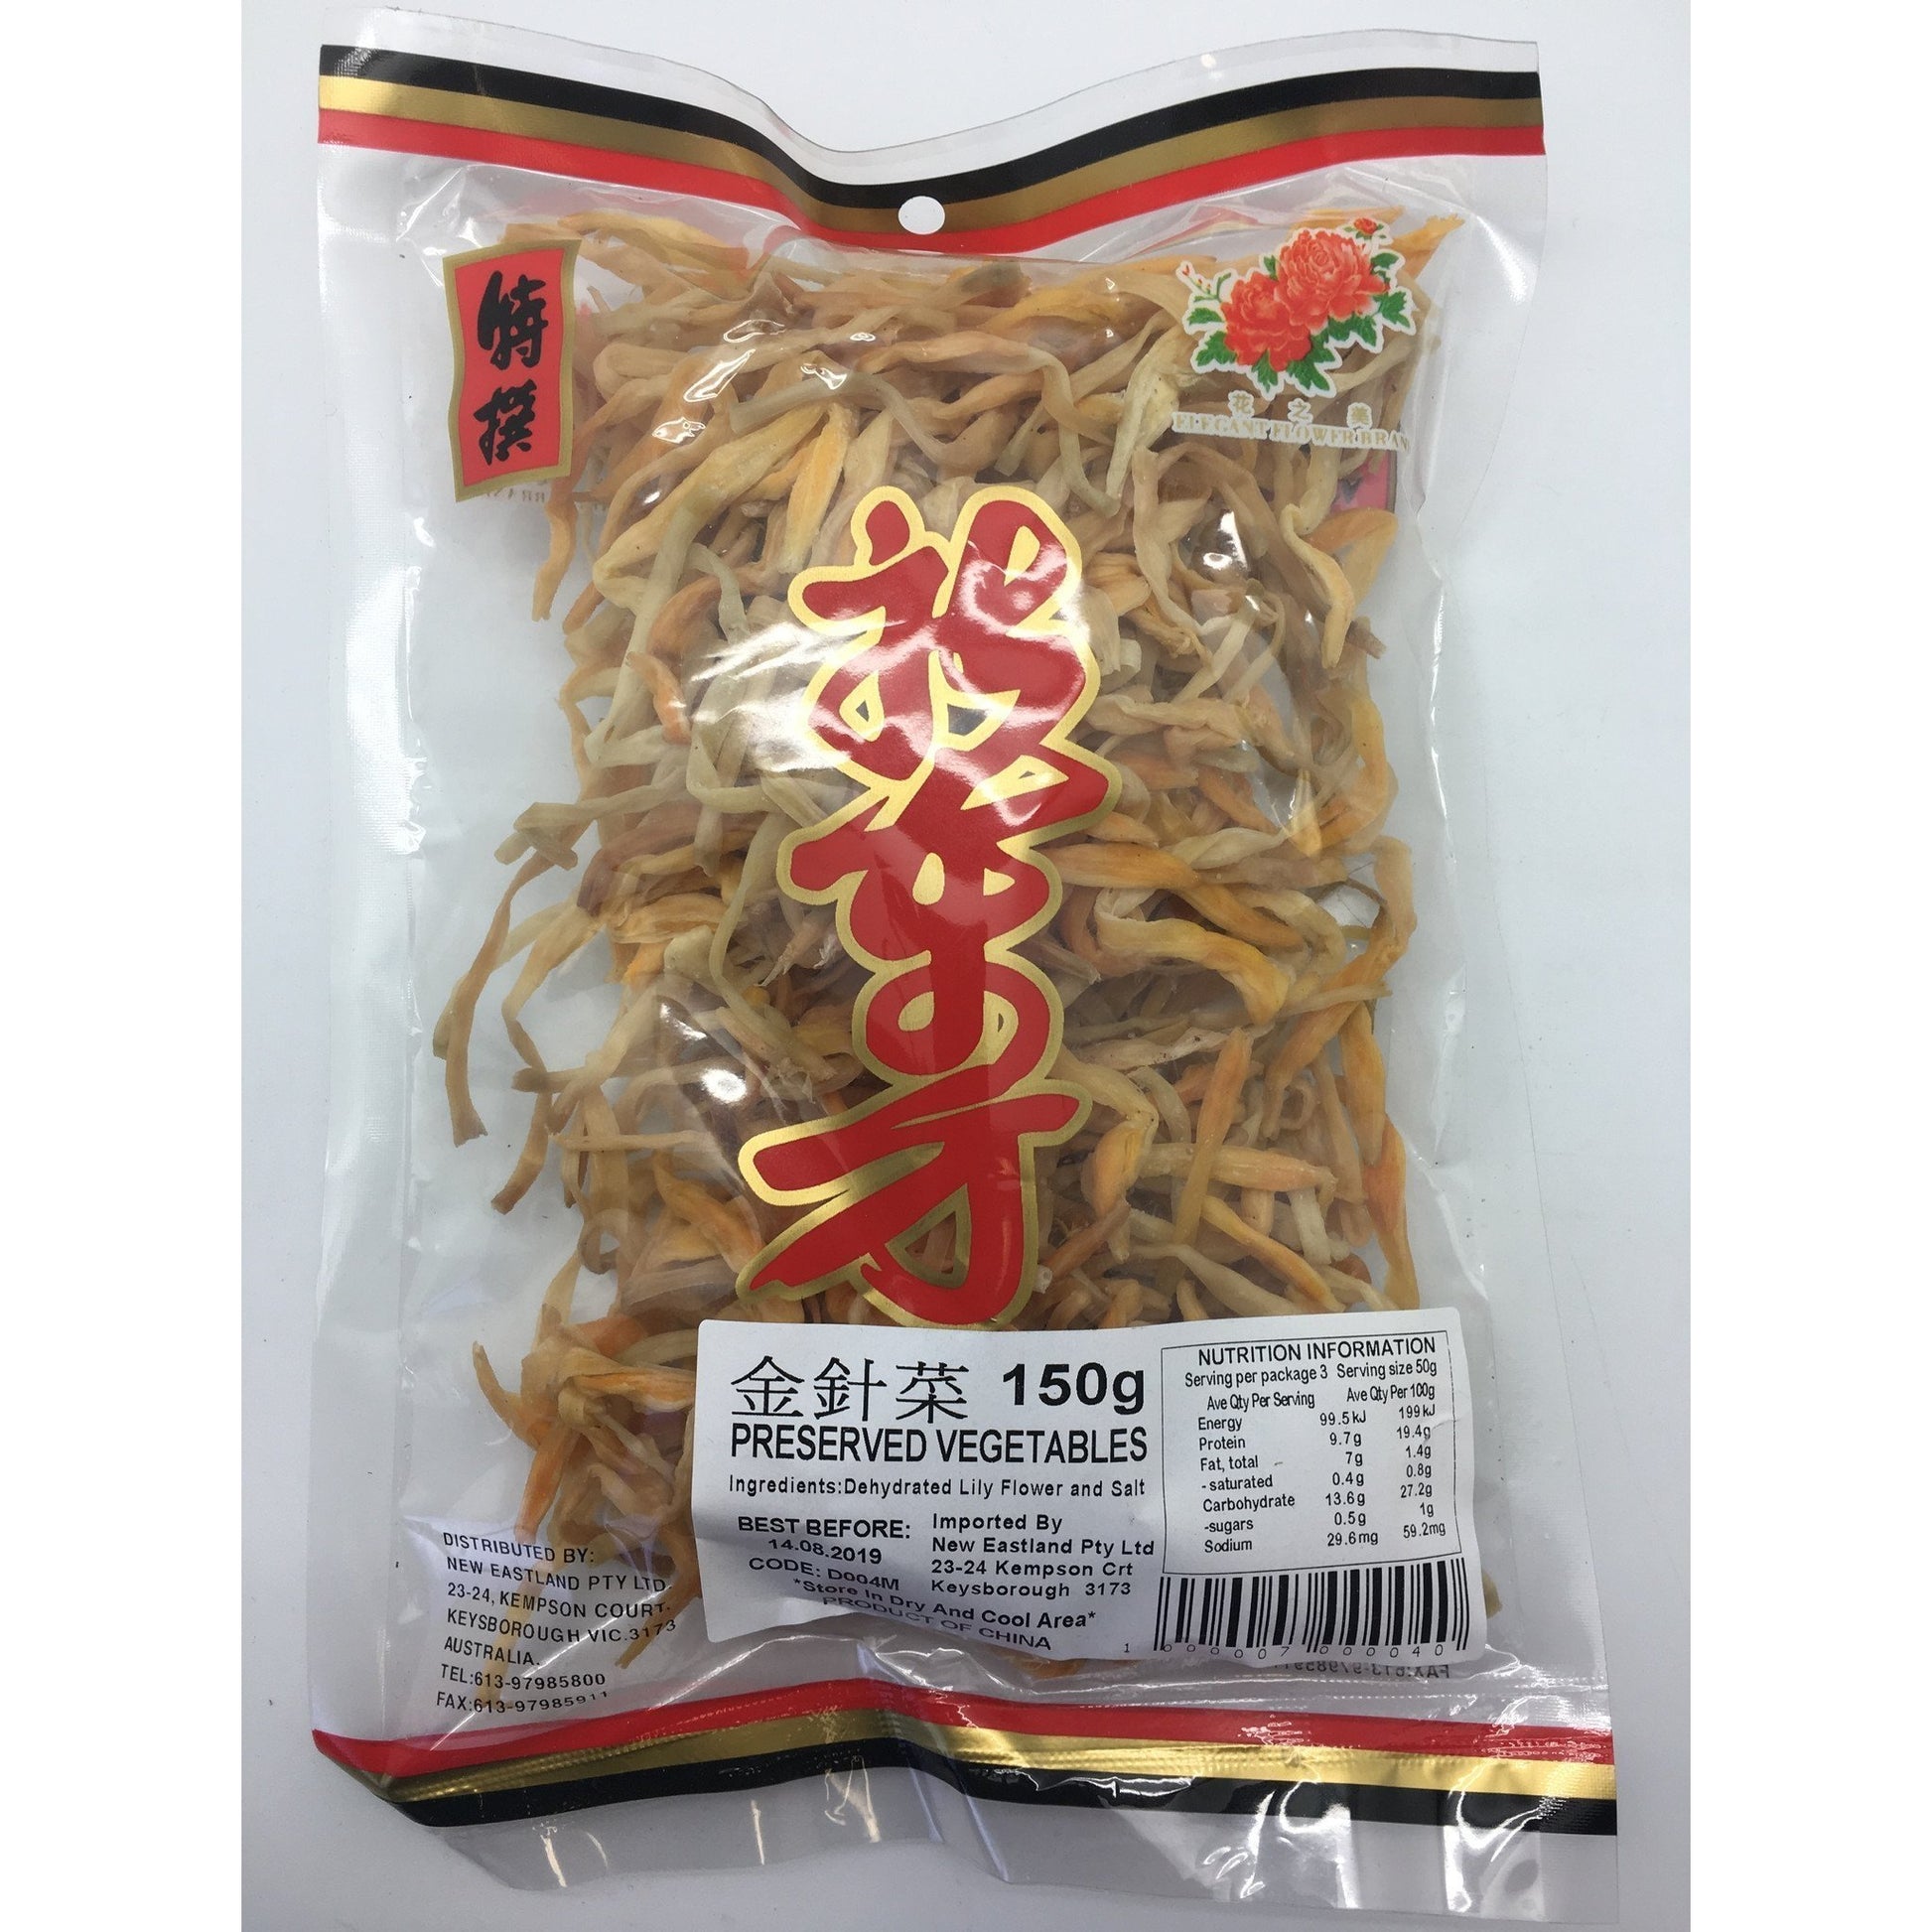 D004M New Eastland Pty Ltd - Preserved Vegetables 150g - 50 bags / 1 CTN - New Eastland Pty Ltd - Asian food wholesalers